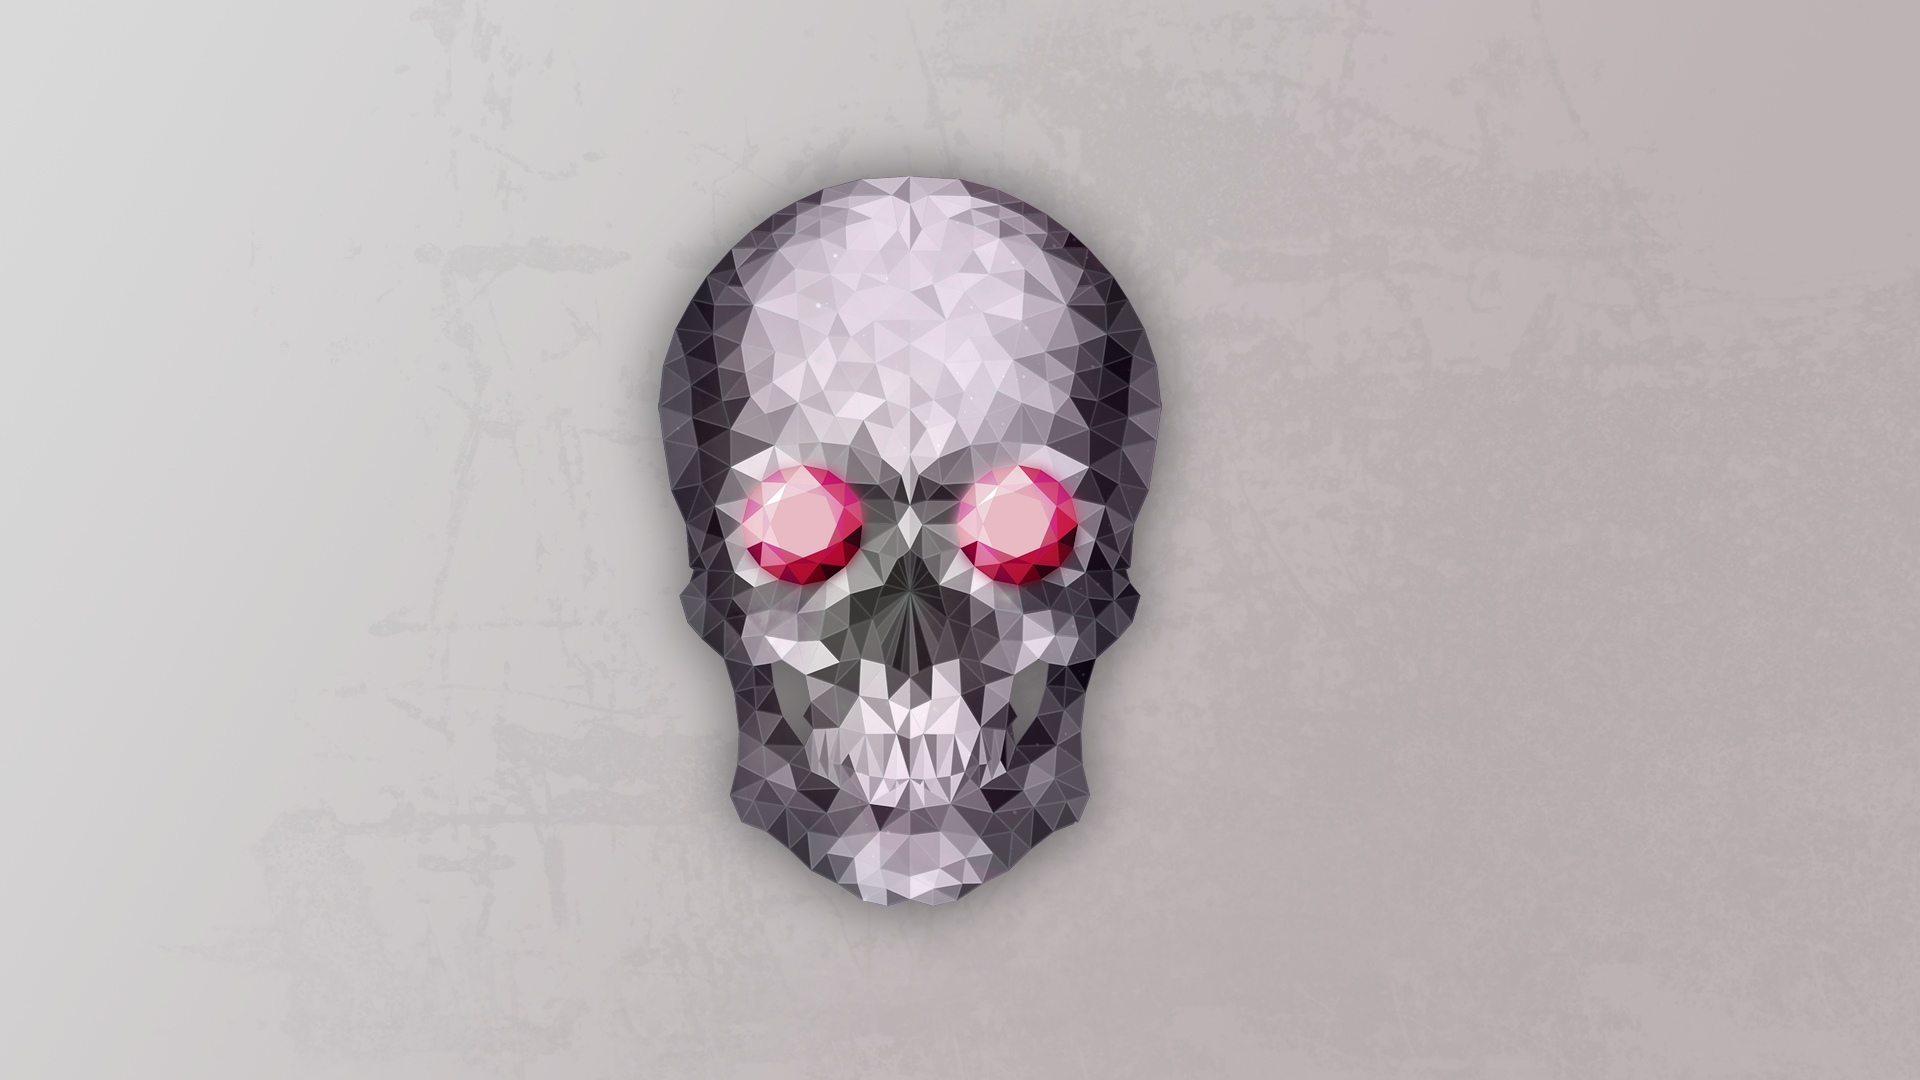 General 1920x1080 skull simple background low poly digital art artwork DeviantArt